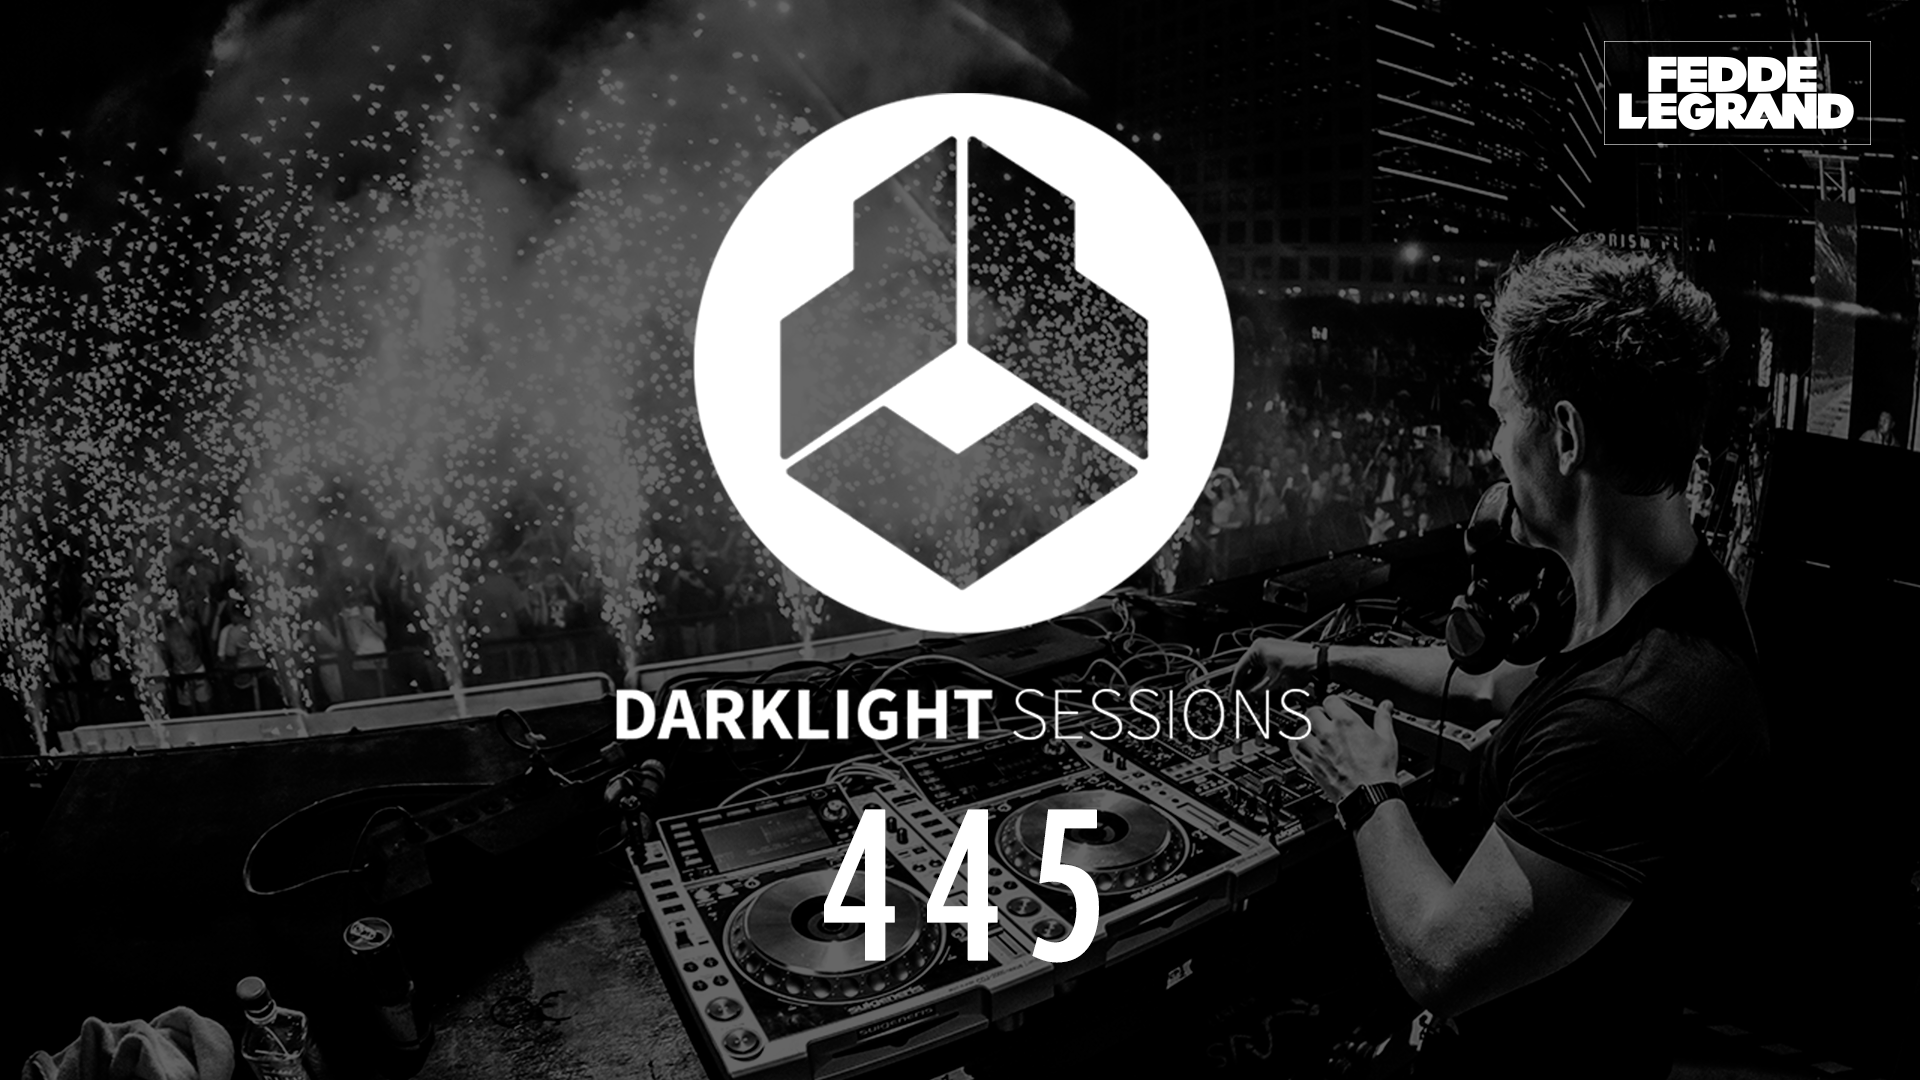 Darklight Sessions 445